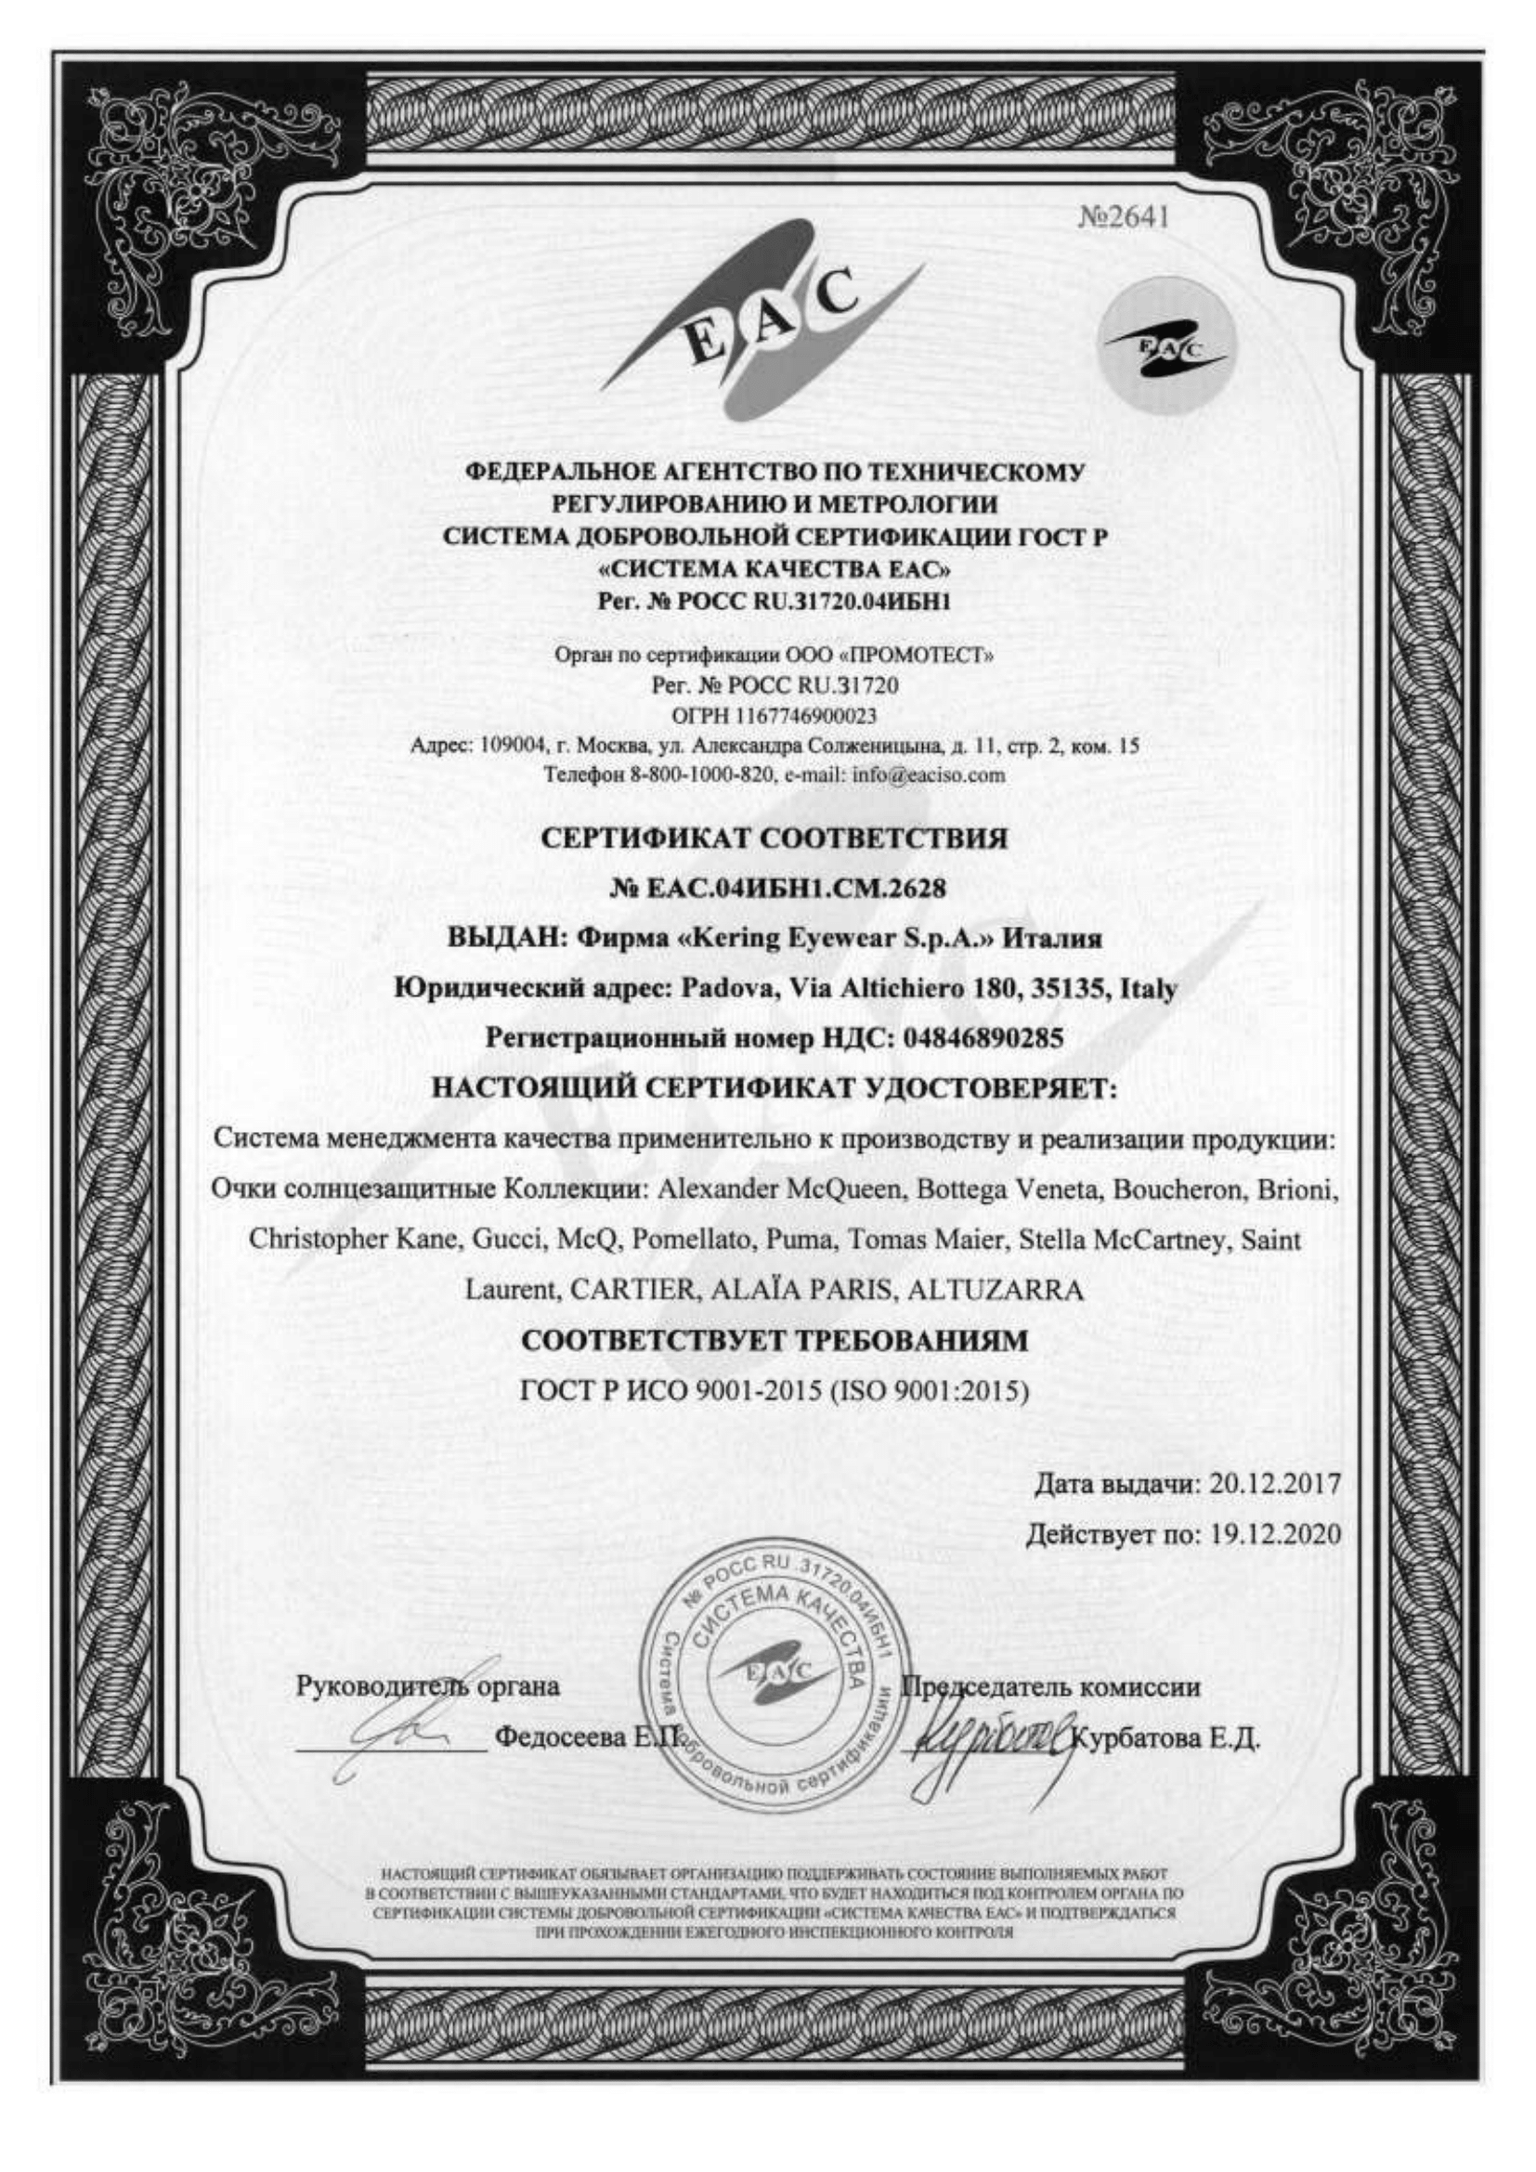 /images/certificates/sertificate4-7.png